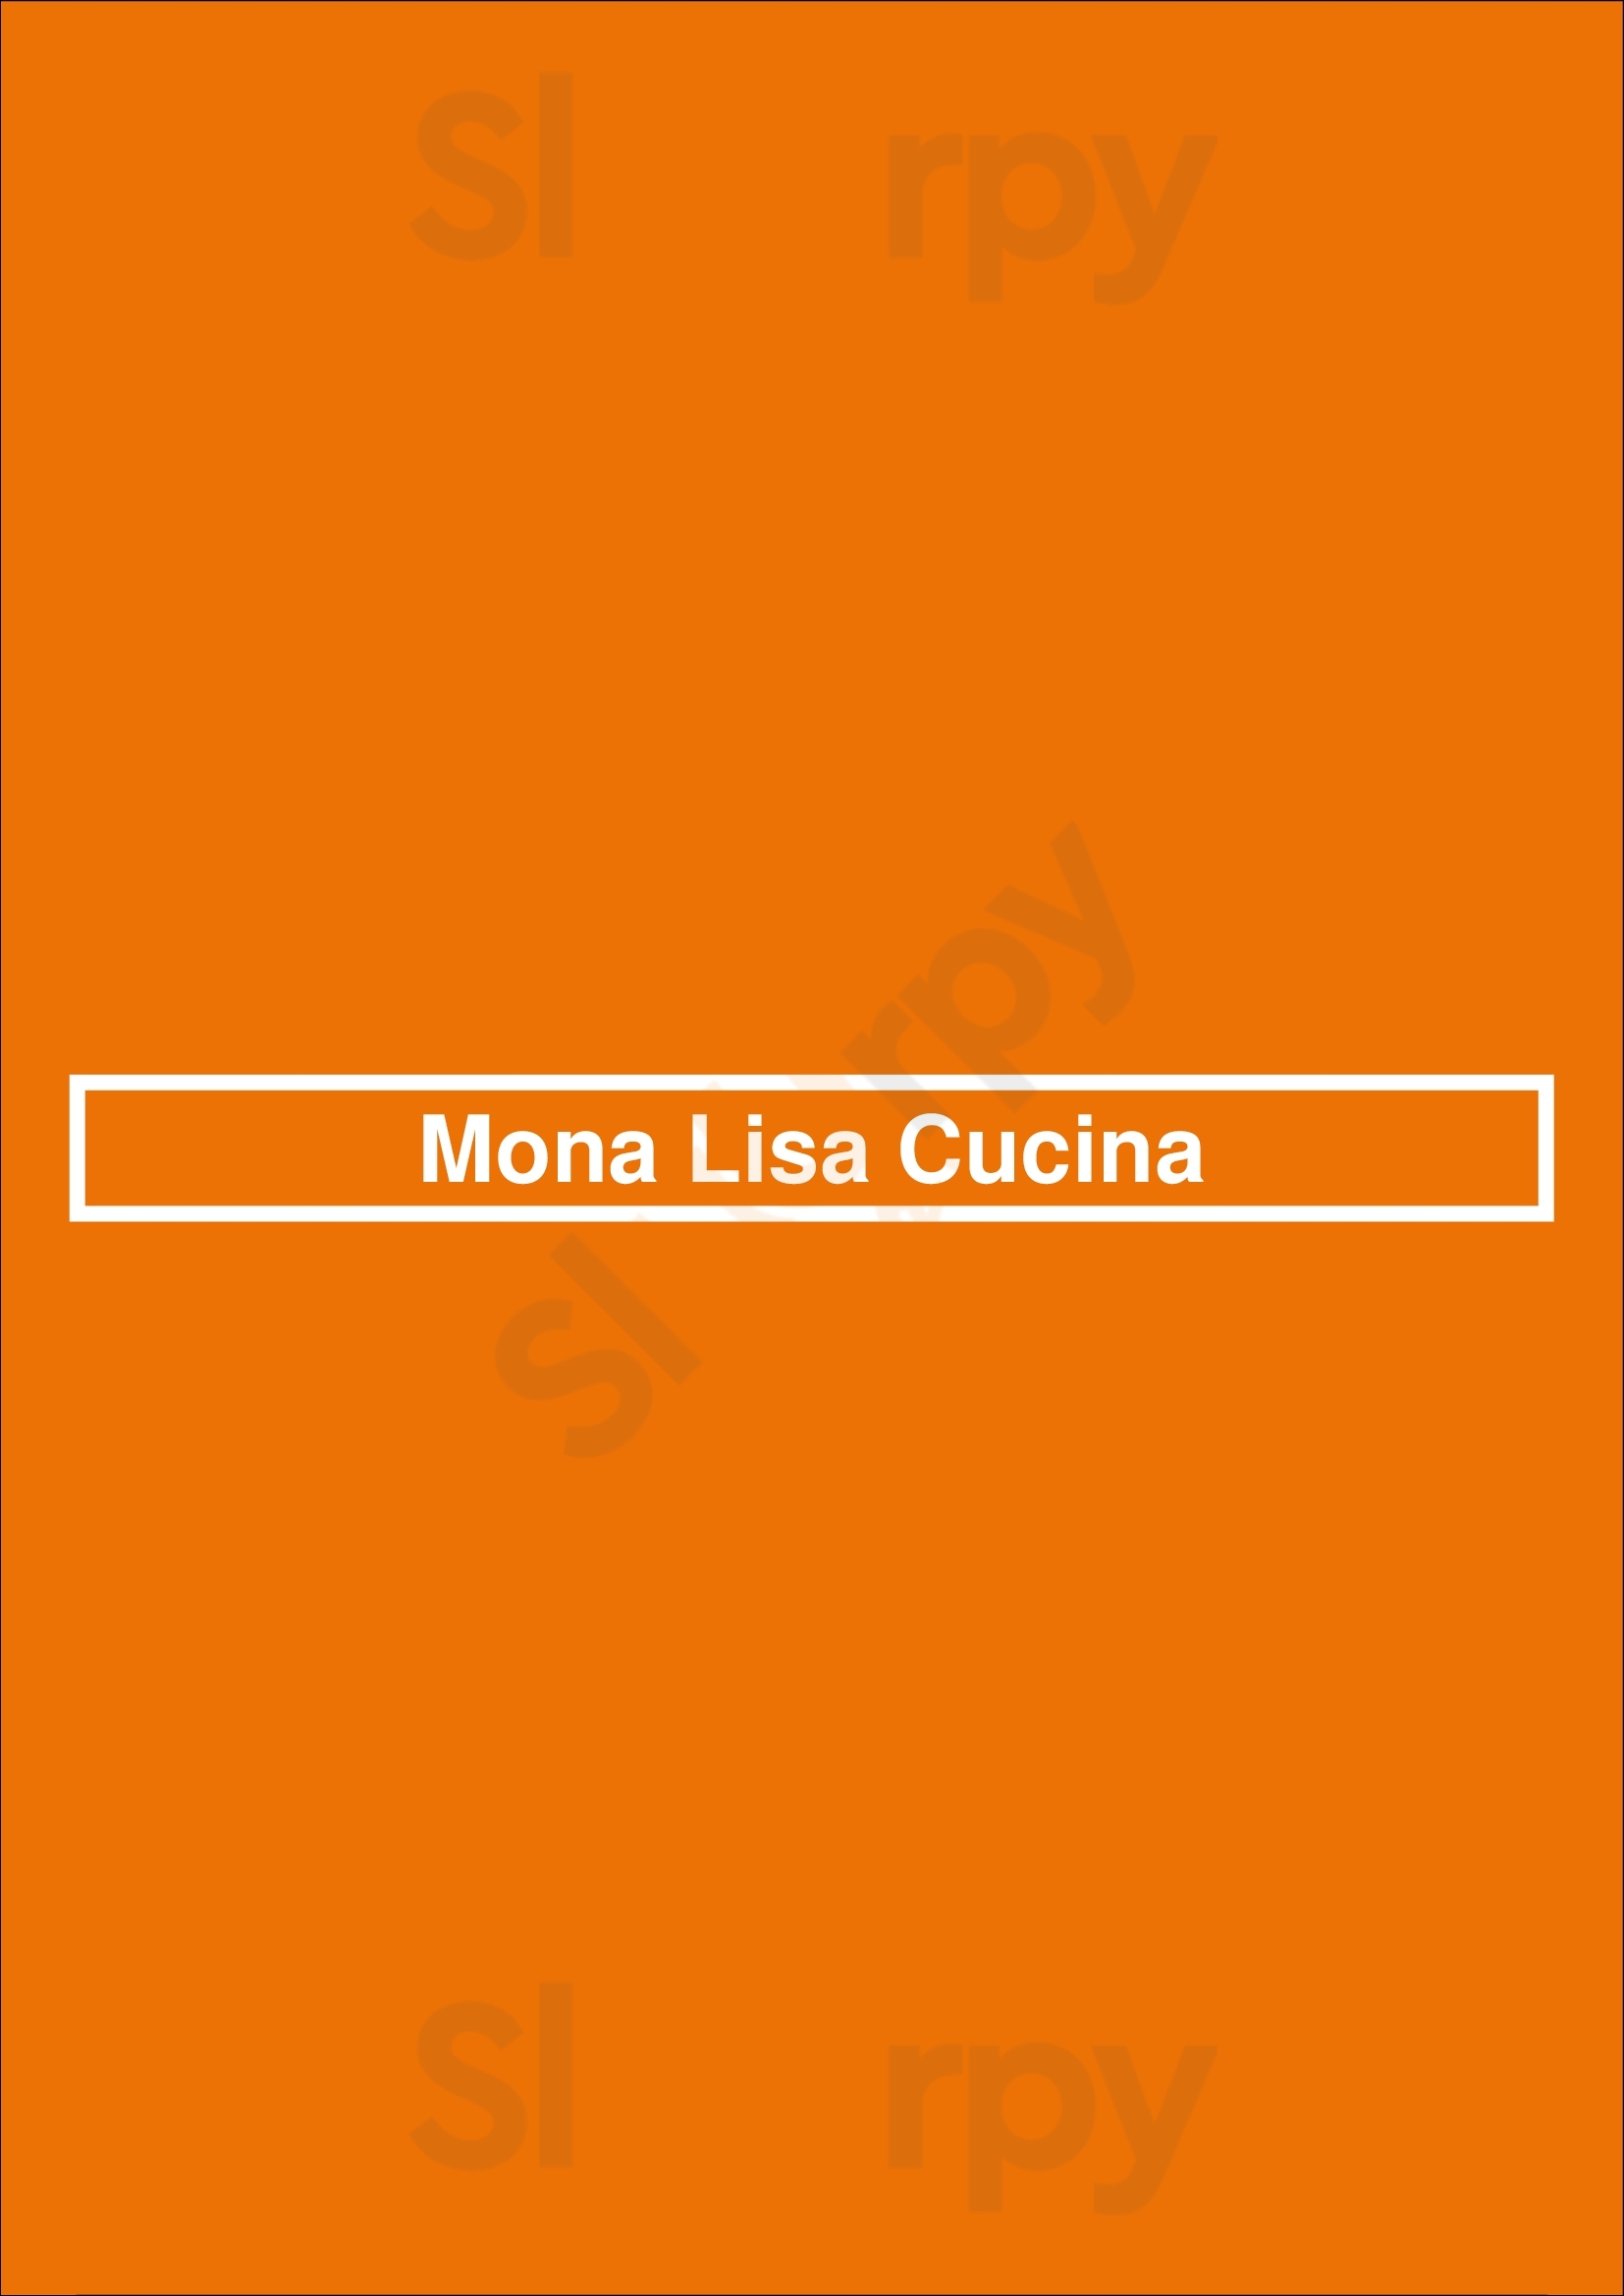 Mona Lisa Cucina Huntington Beach Menu - 1